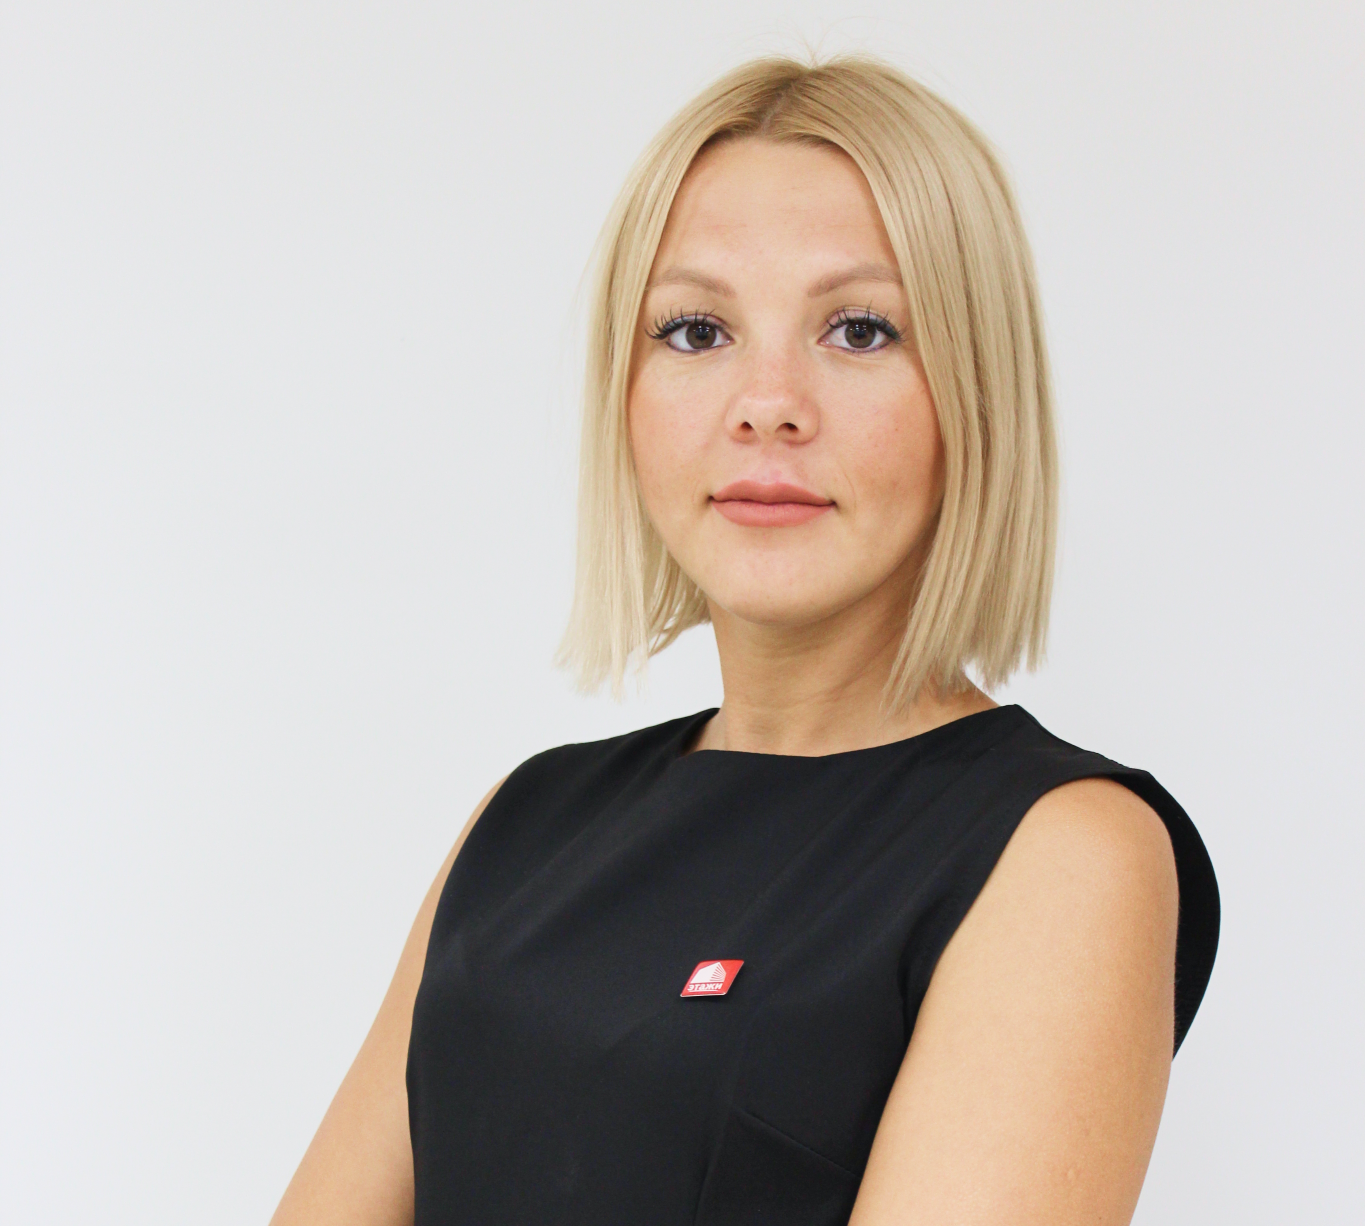 Вероника Захаренко, специалист по недвижимости компании “Этажи”